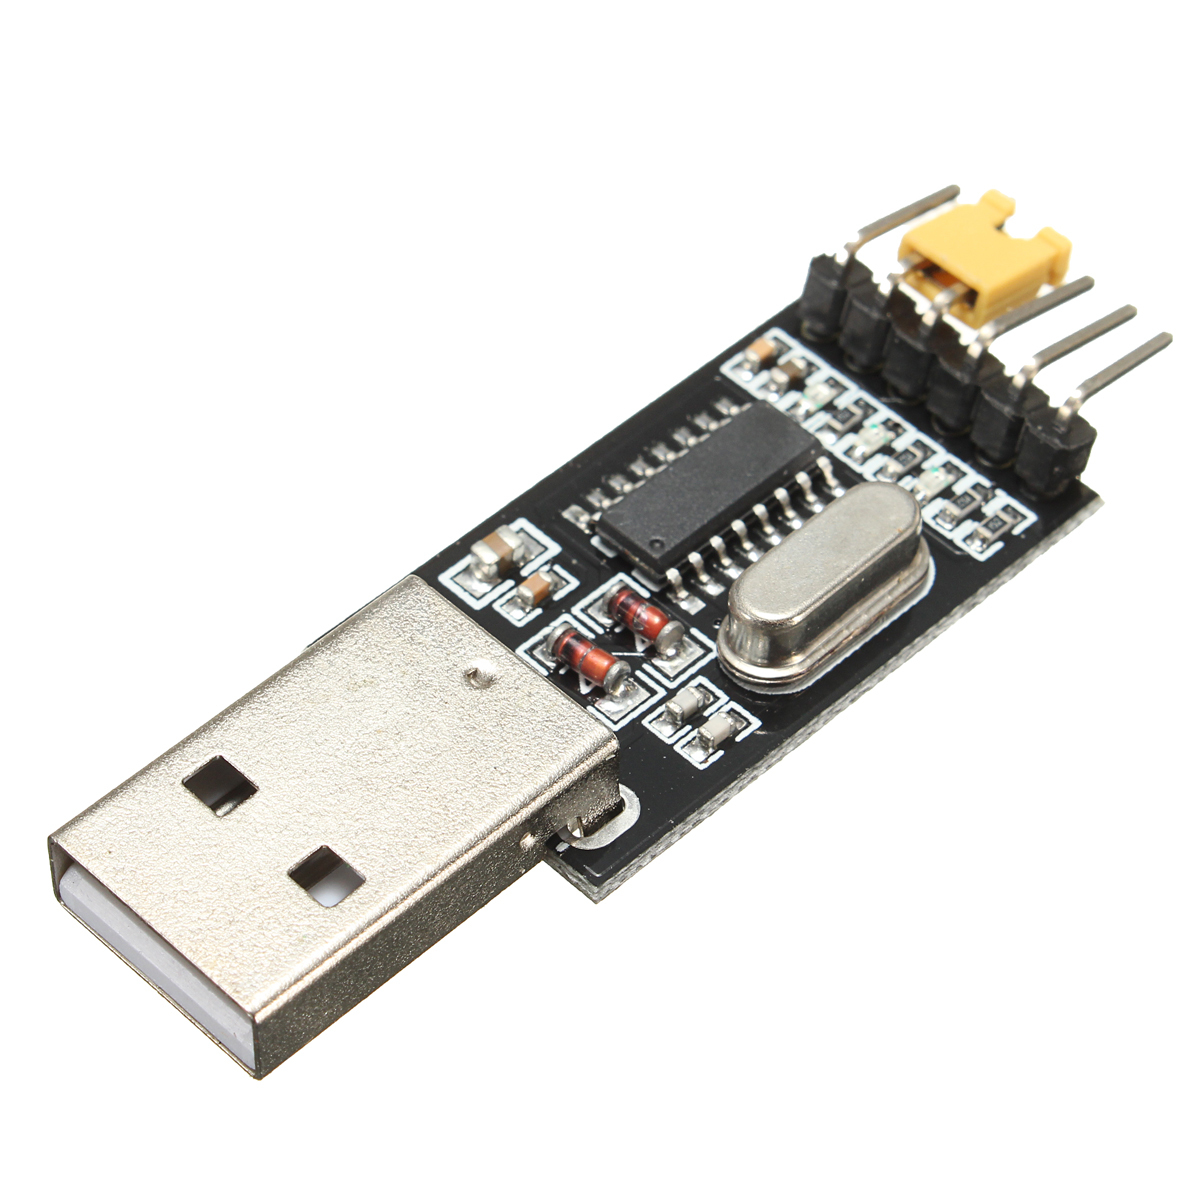 10pcs 3.3V 5V USB to TTL Converter CH340G UART Serial Adapter Module STC 1